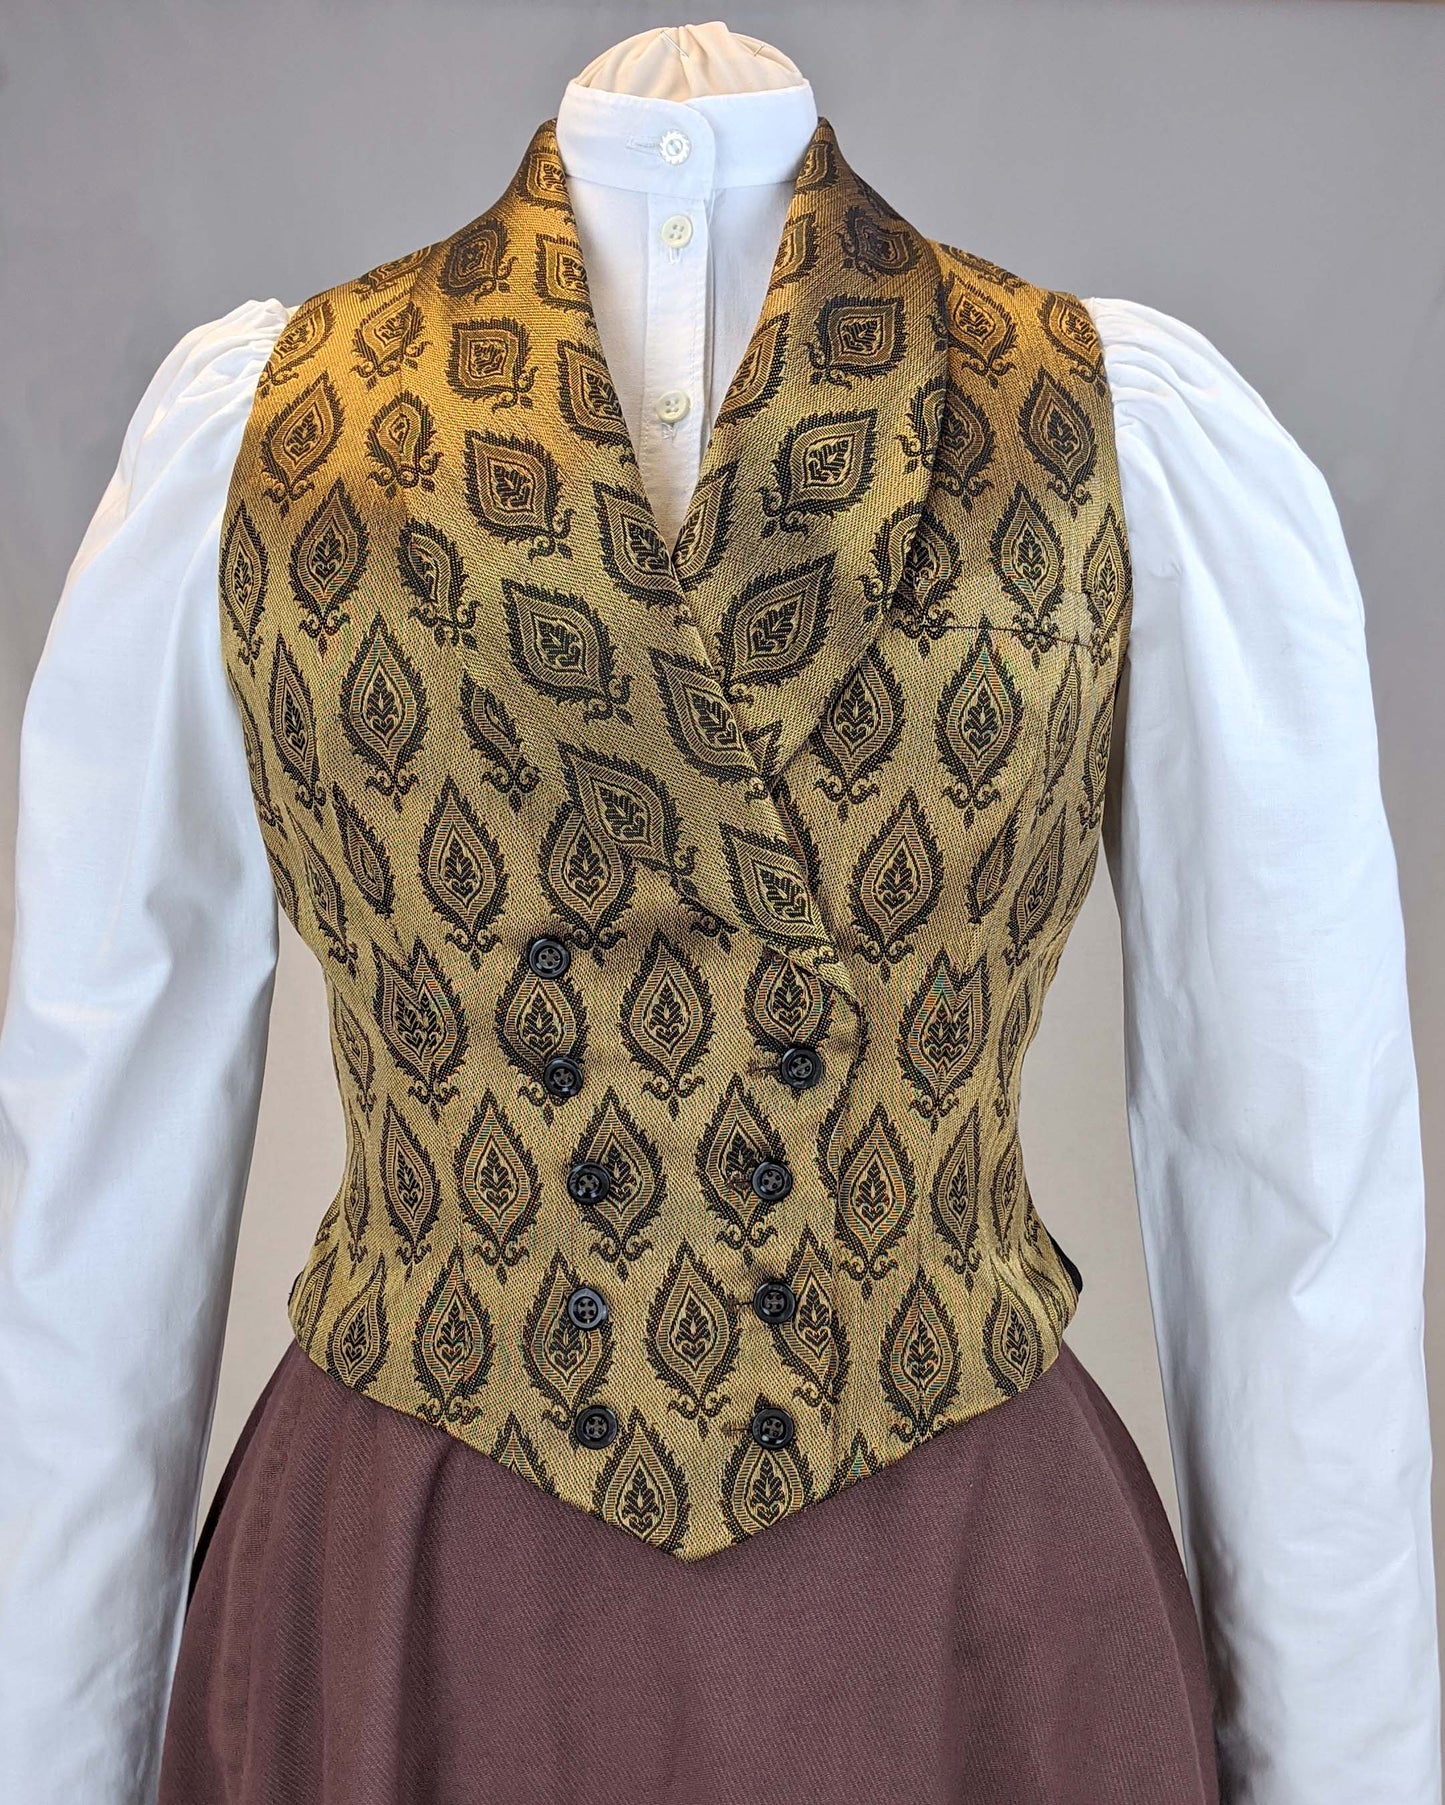 #0220 Edwardian Ladies Vests 1890 Sewing Pattern Size US 8-30 (EU 34-56) Printed Pattern